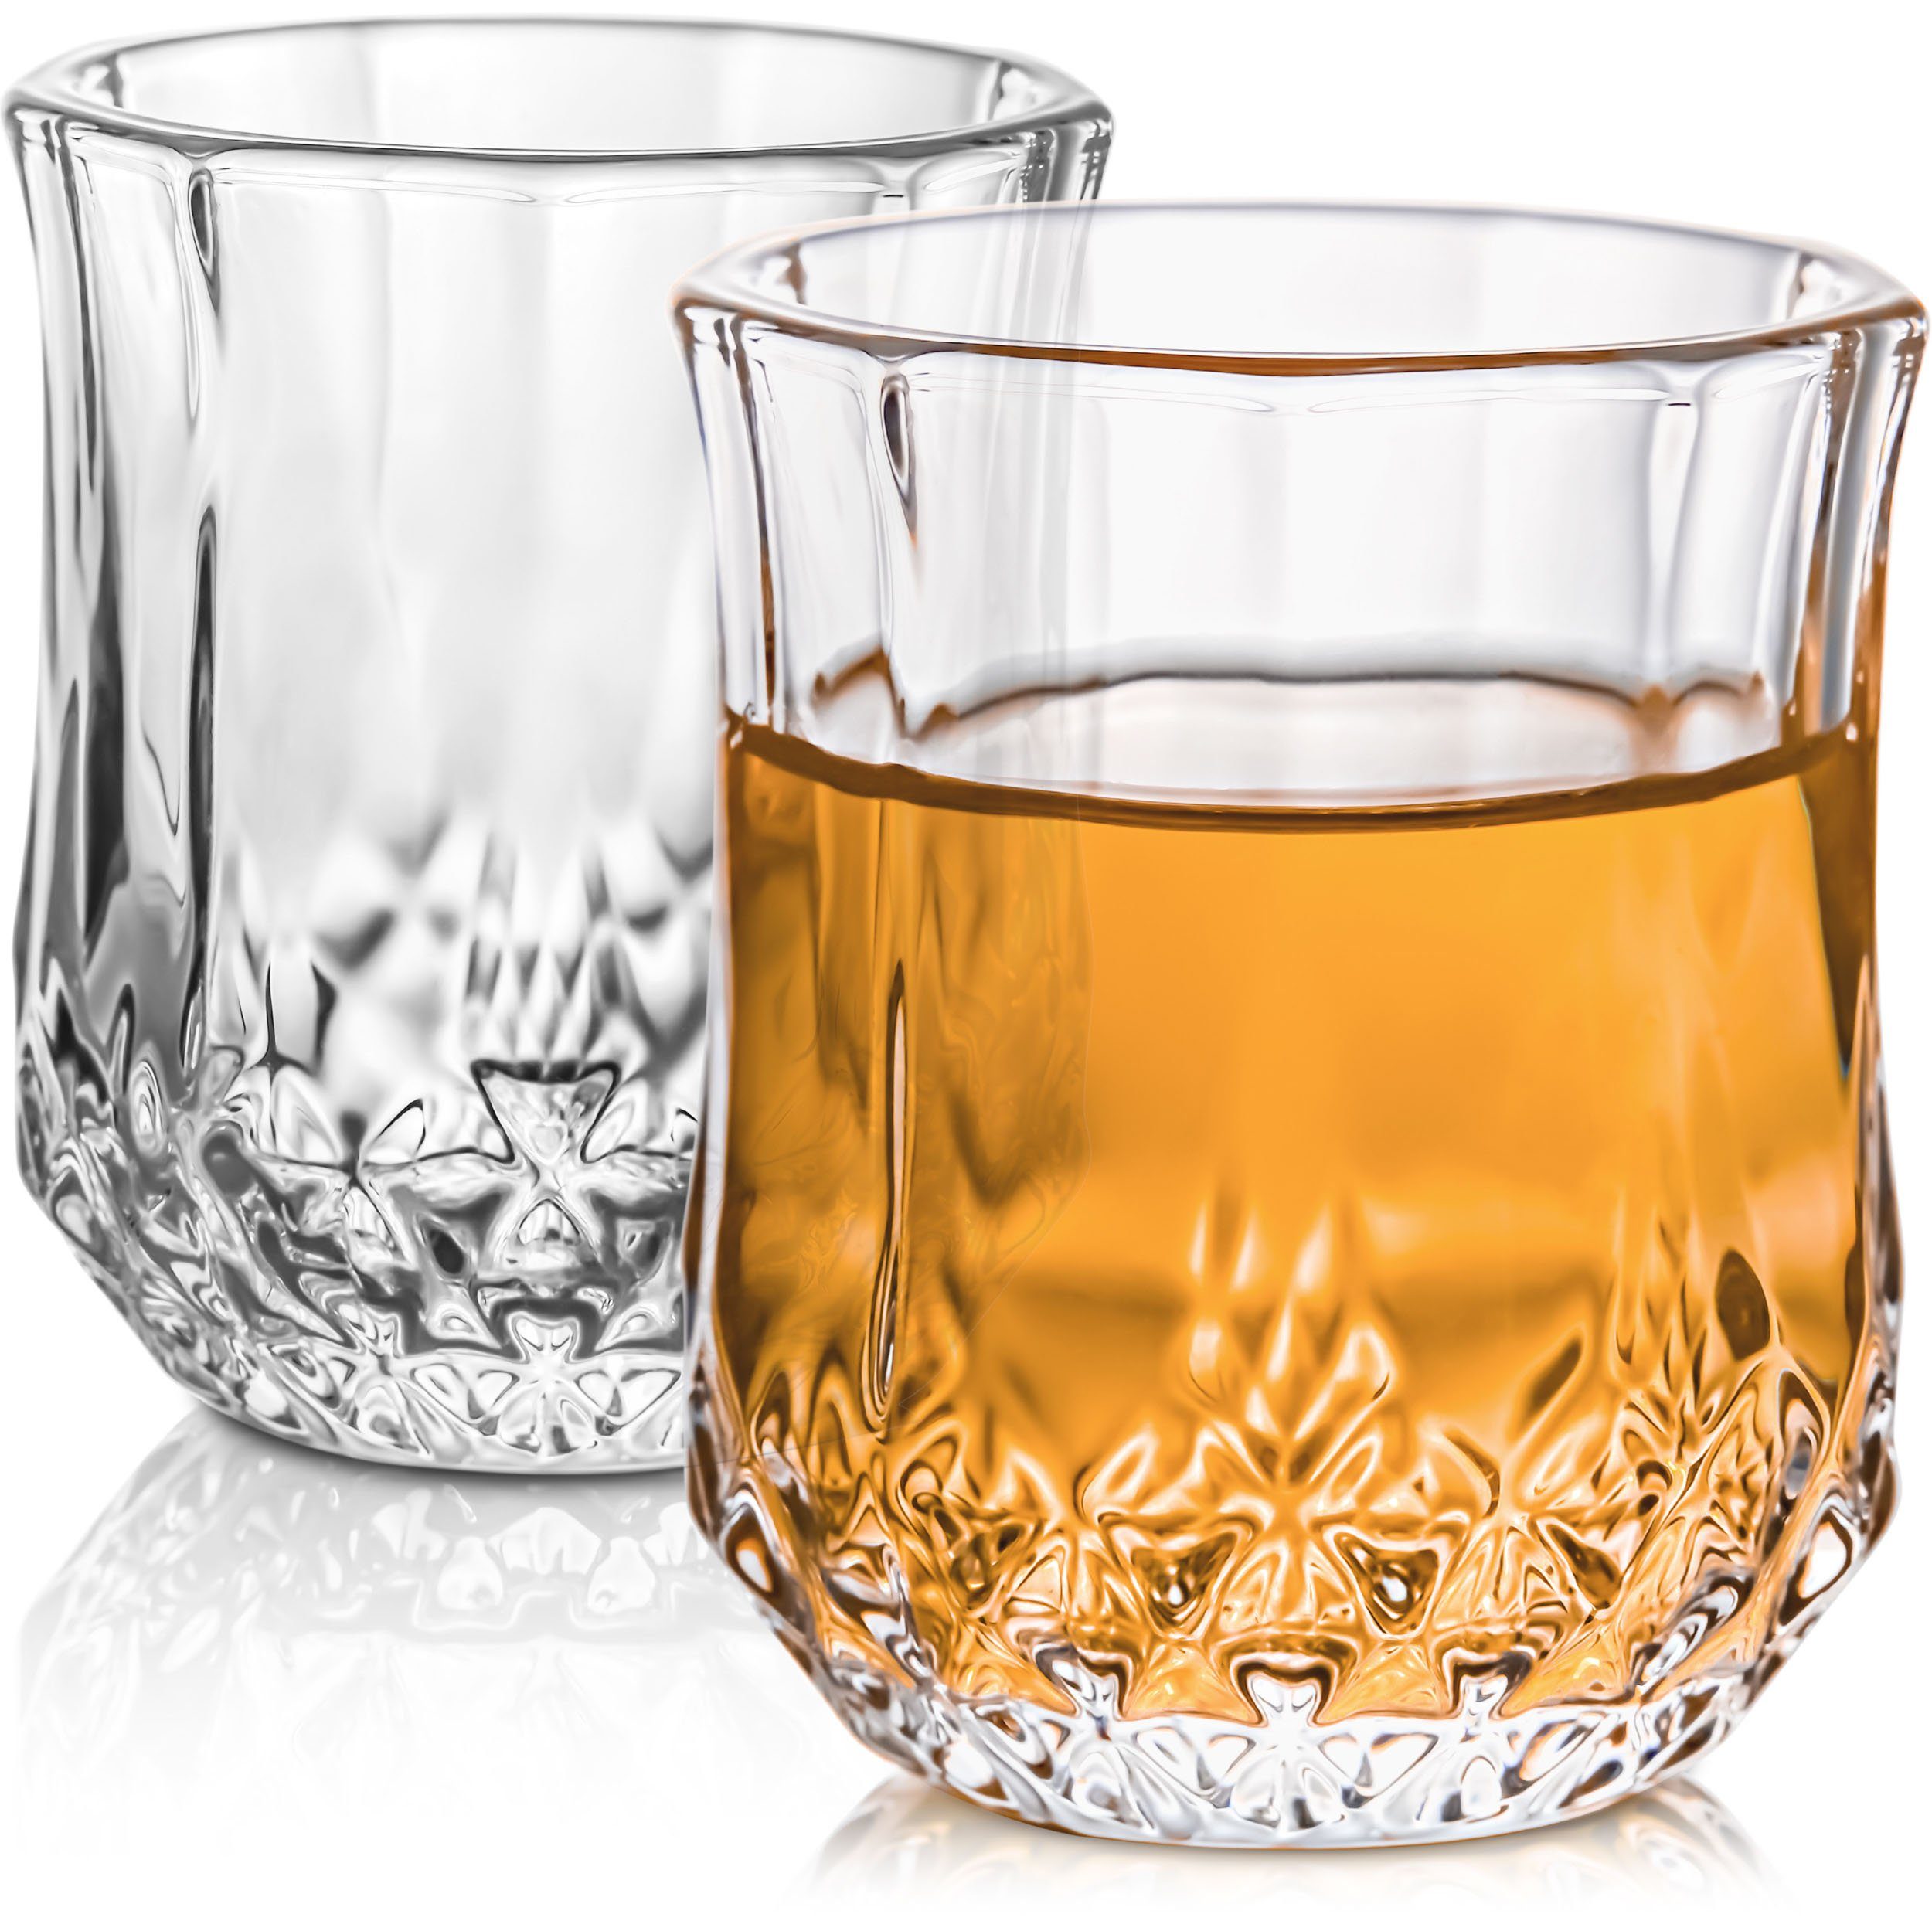 Praknu Schnapsglas 6 Келихи для шнапсу Kristall 4cl Curvy Склянки для віскі Set, Kristallglas, Spülmaschinenfest - Standfest dank dickem Boden - Vintage Design